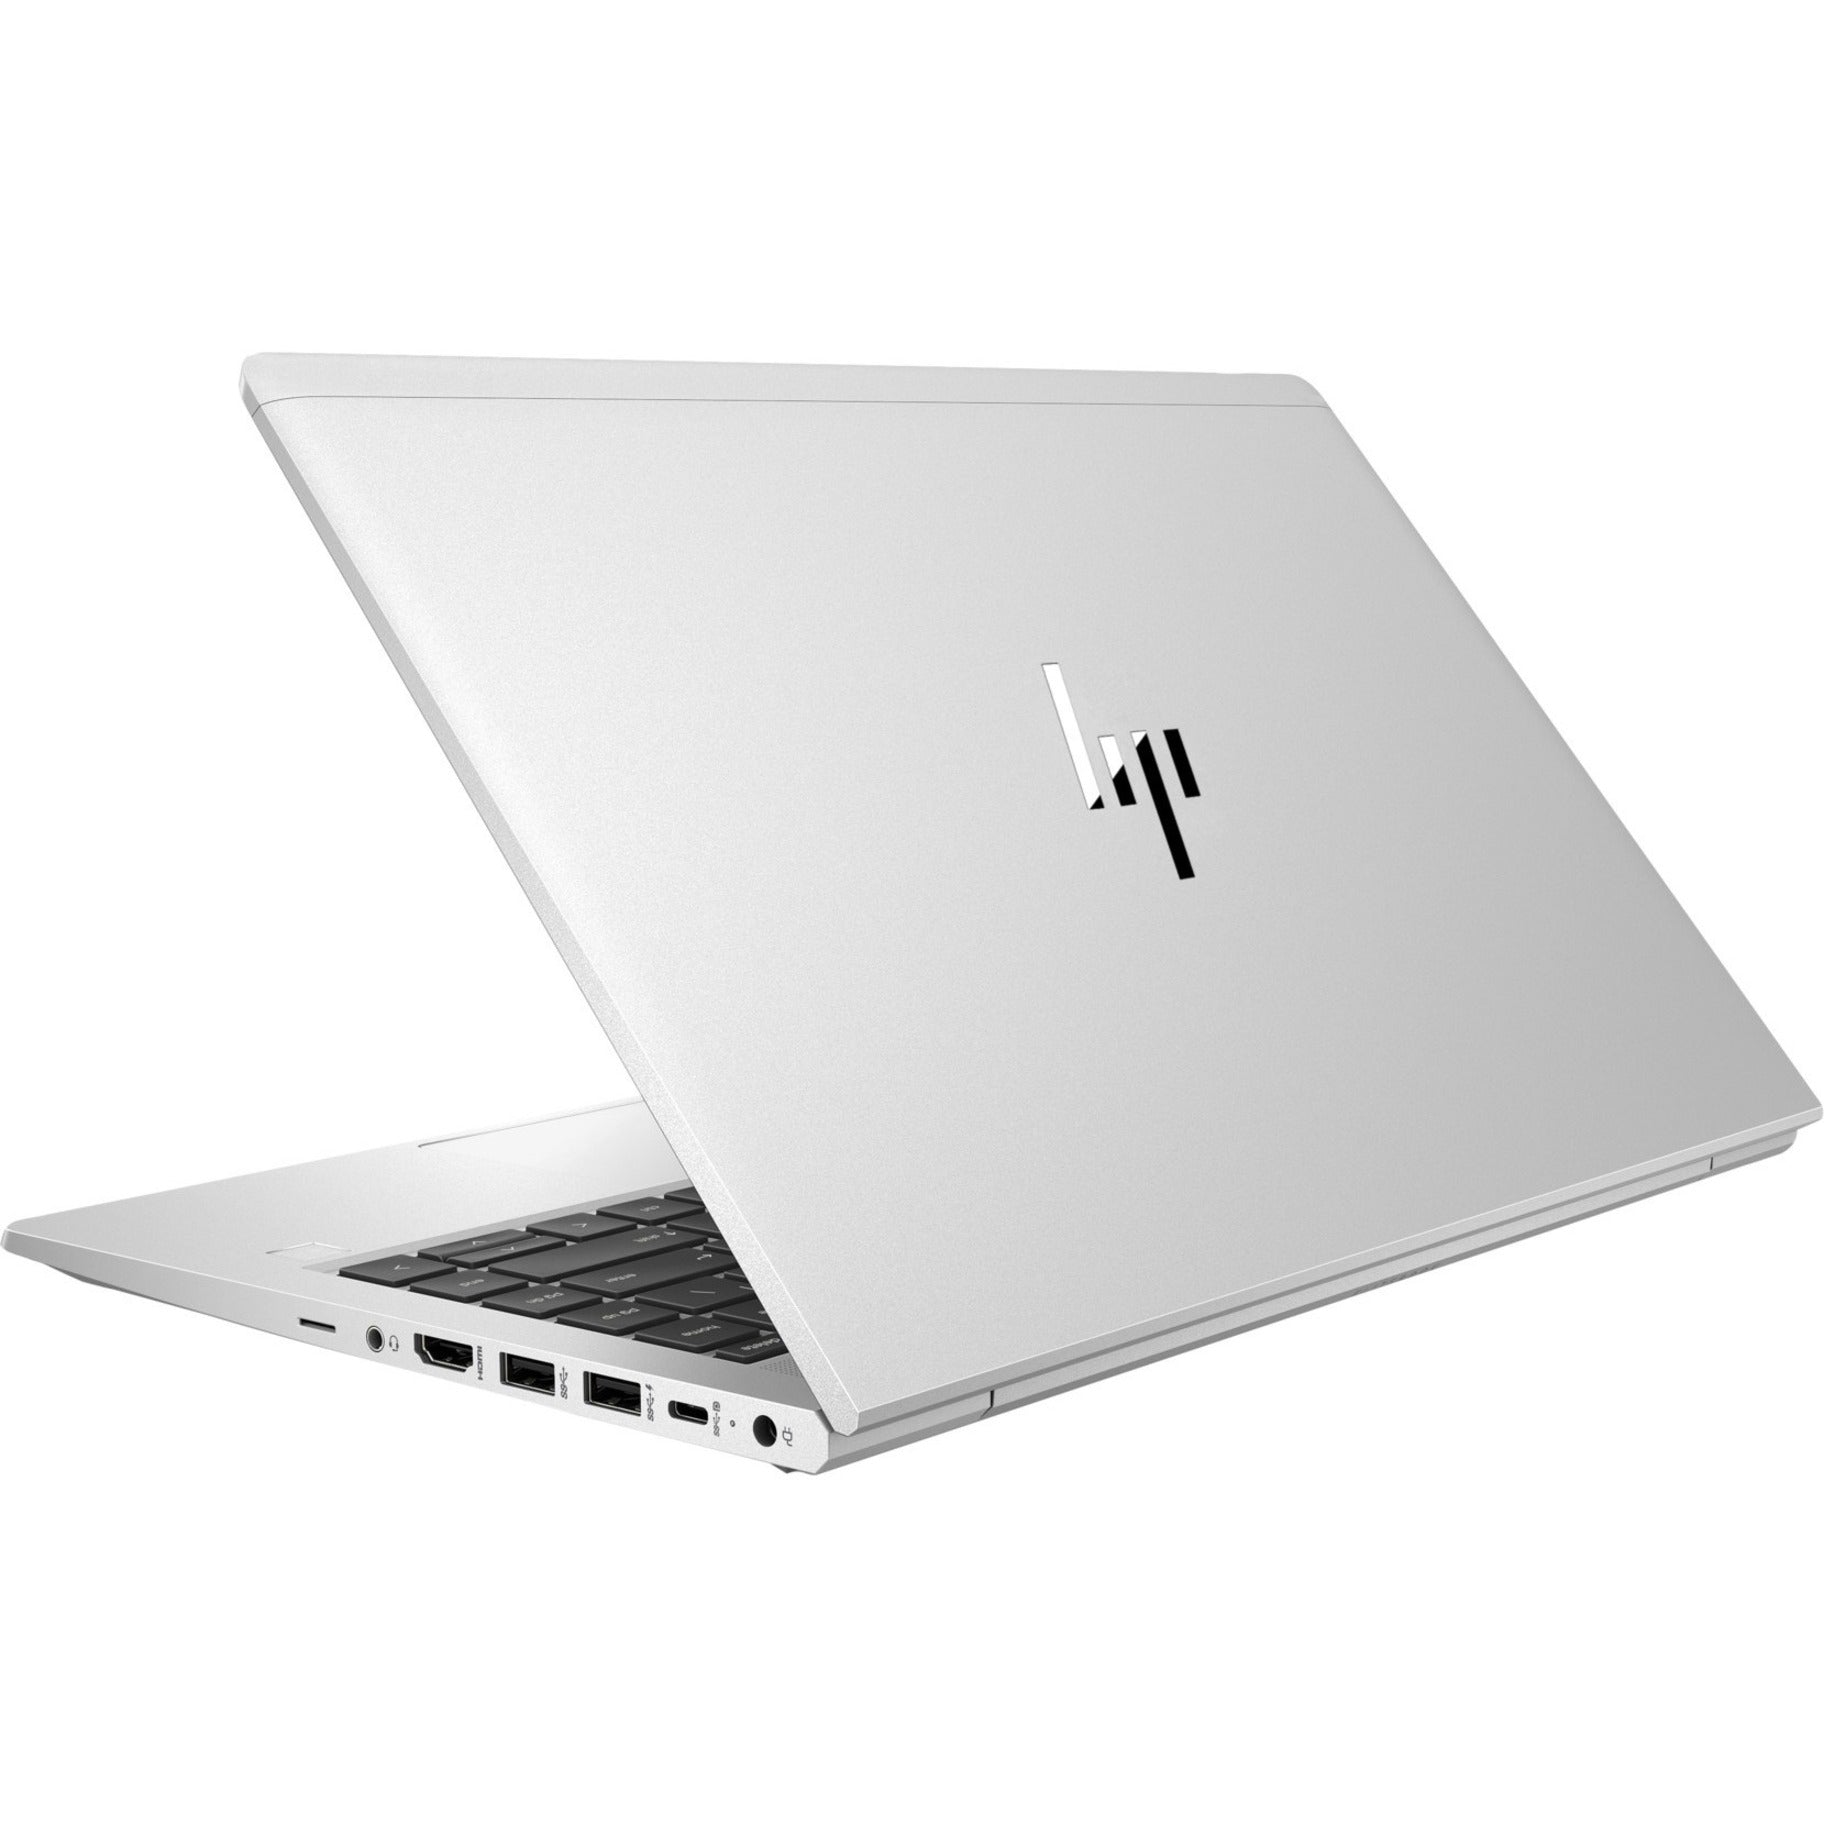 HP Elite mt645 G7 14" Thin Client Notebook, Full HD, AMD Ryzen 3 5425U Quad-core, 8GB RAM, 256GB SSD